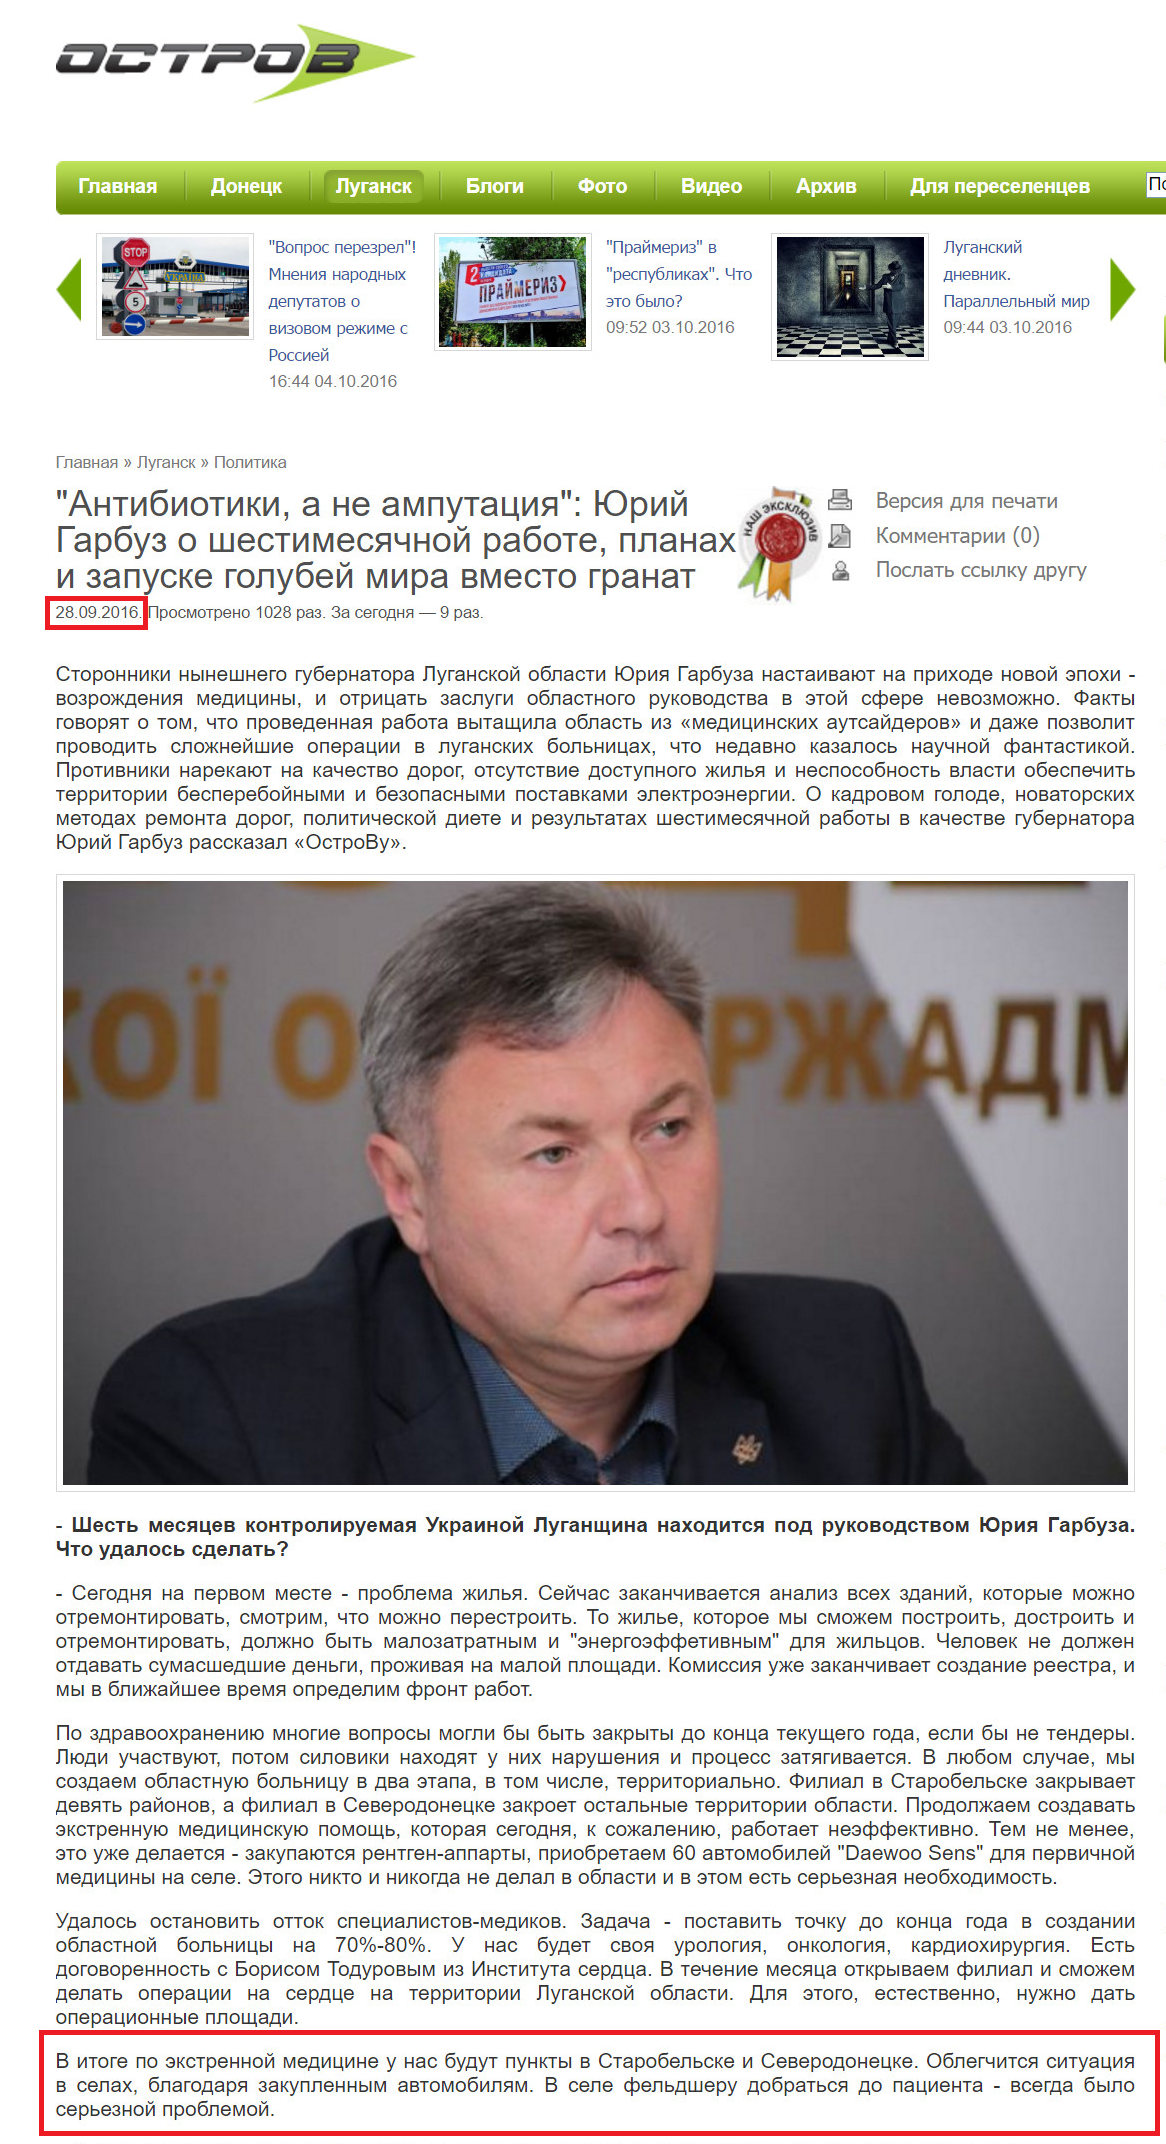 http://www.ostro.org/lugansk/politics/articles/509388/